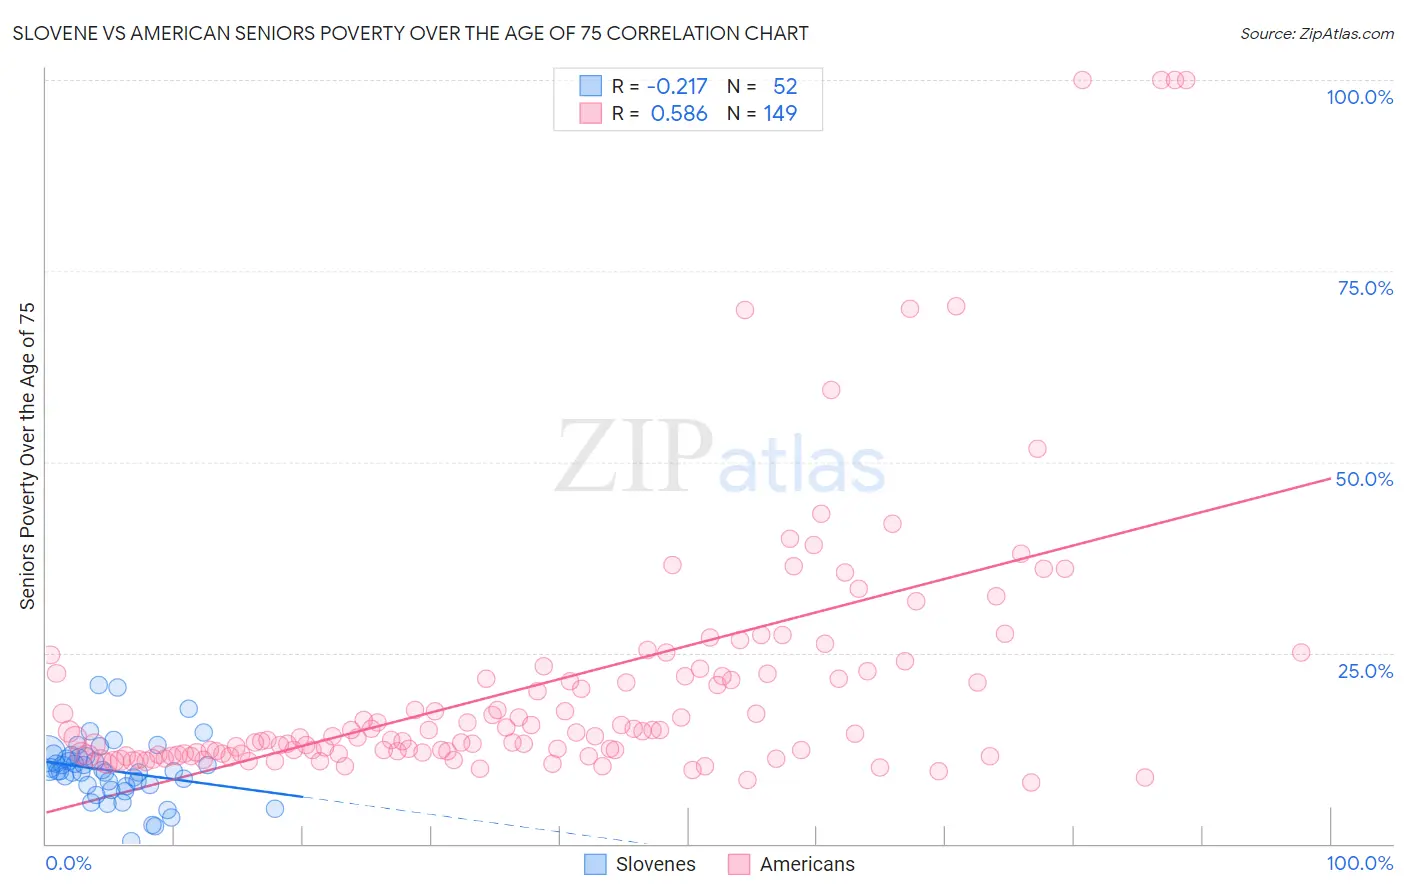 Slovene vs American Seniors Poverty Over the Age of 75